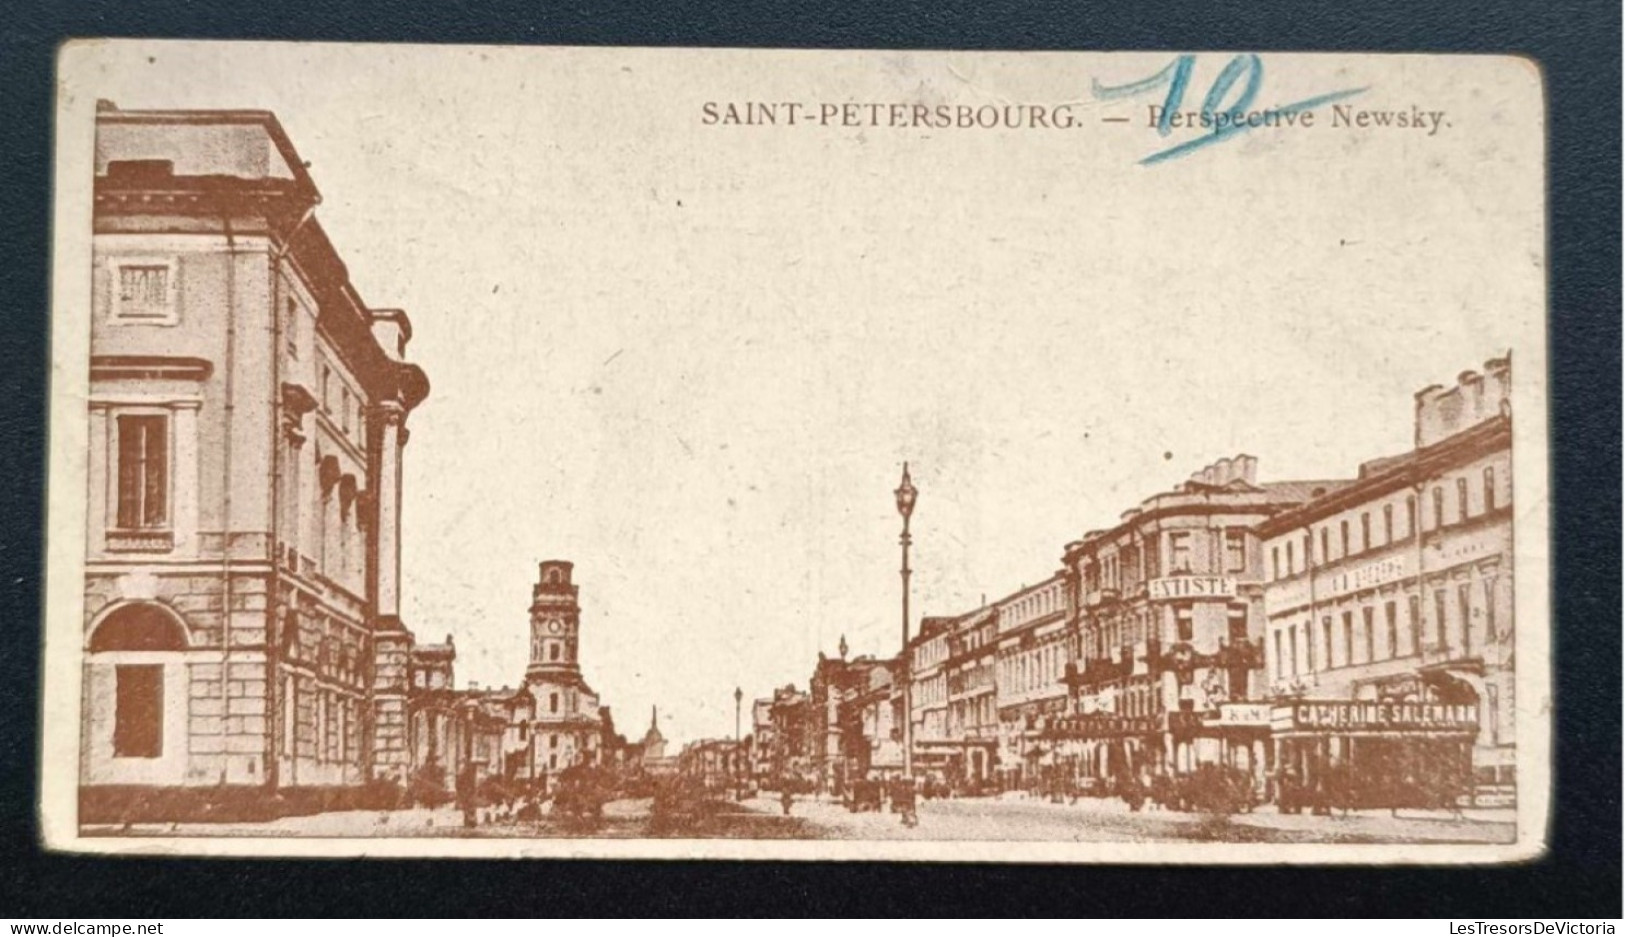 Russie - Saint Petersbourg - Perspective Newsky - Dim:7/13cm - Carte Postale Ancienne - Russia